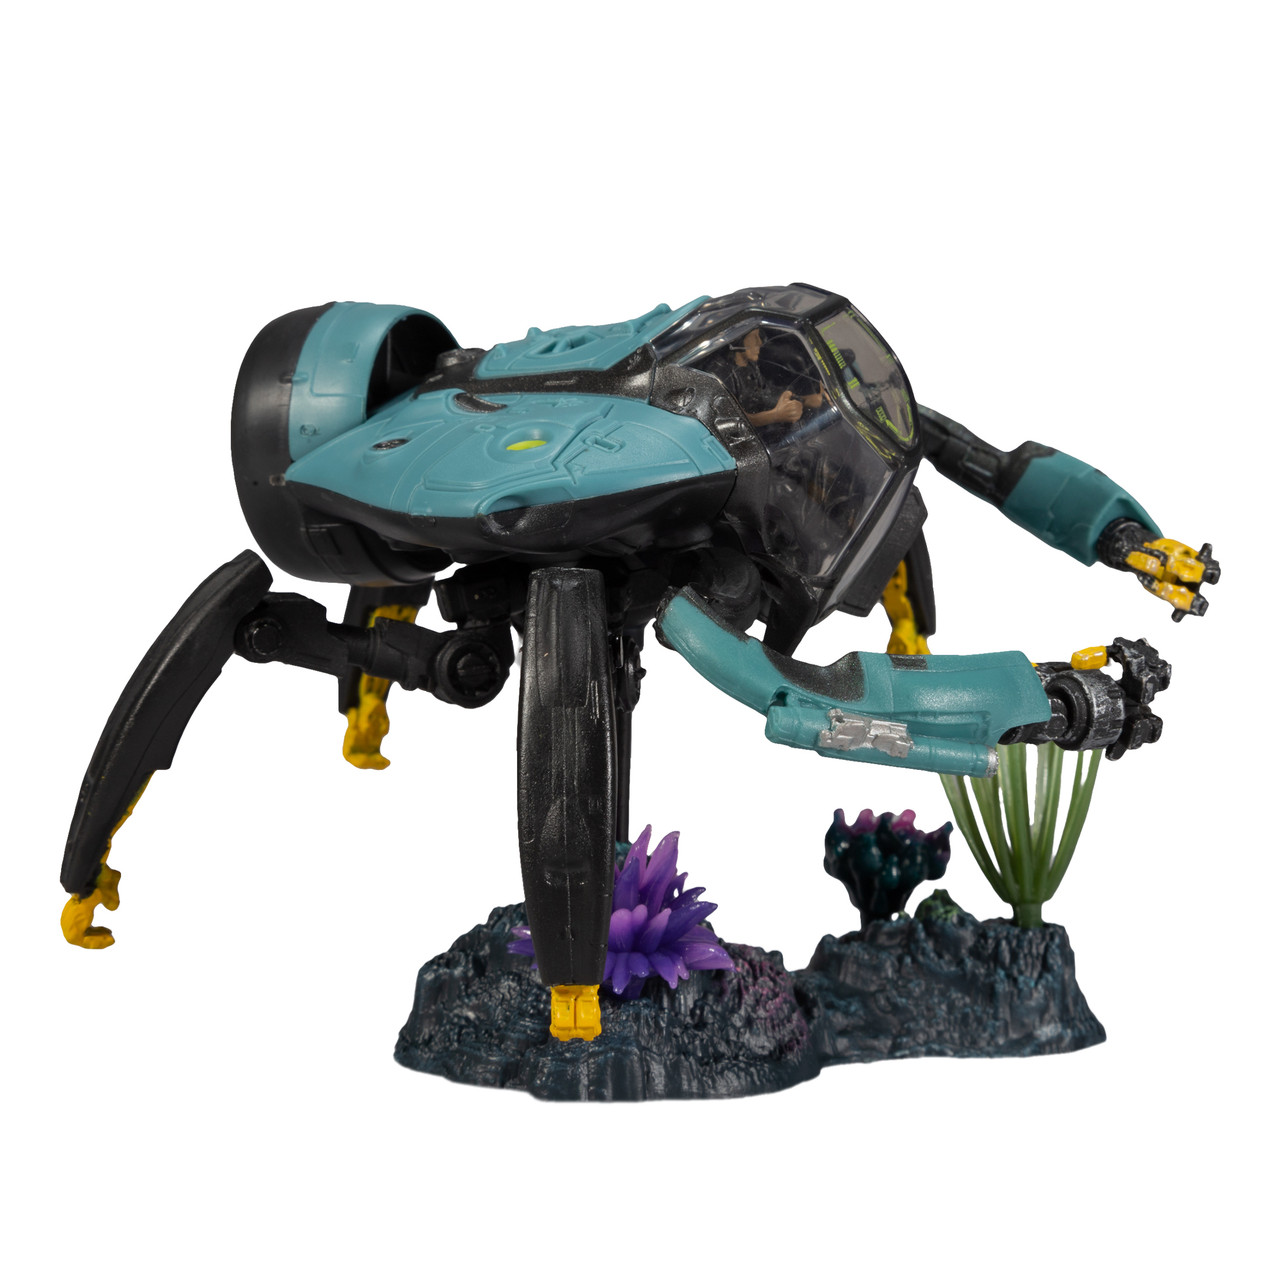 LEGO Avatar Minifigures - RDA Crab Suit Pilot with Gun - avt017 - Avatar:  The Way of Water